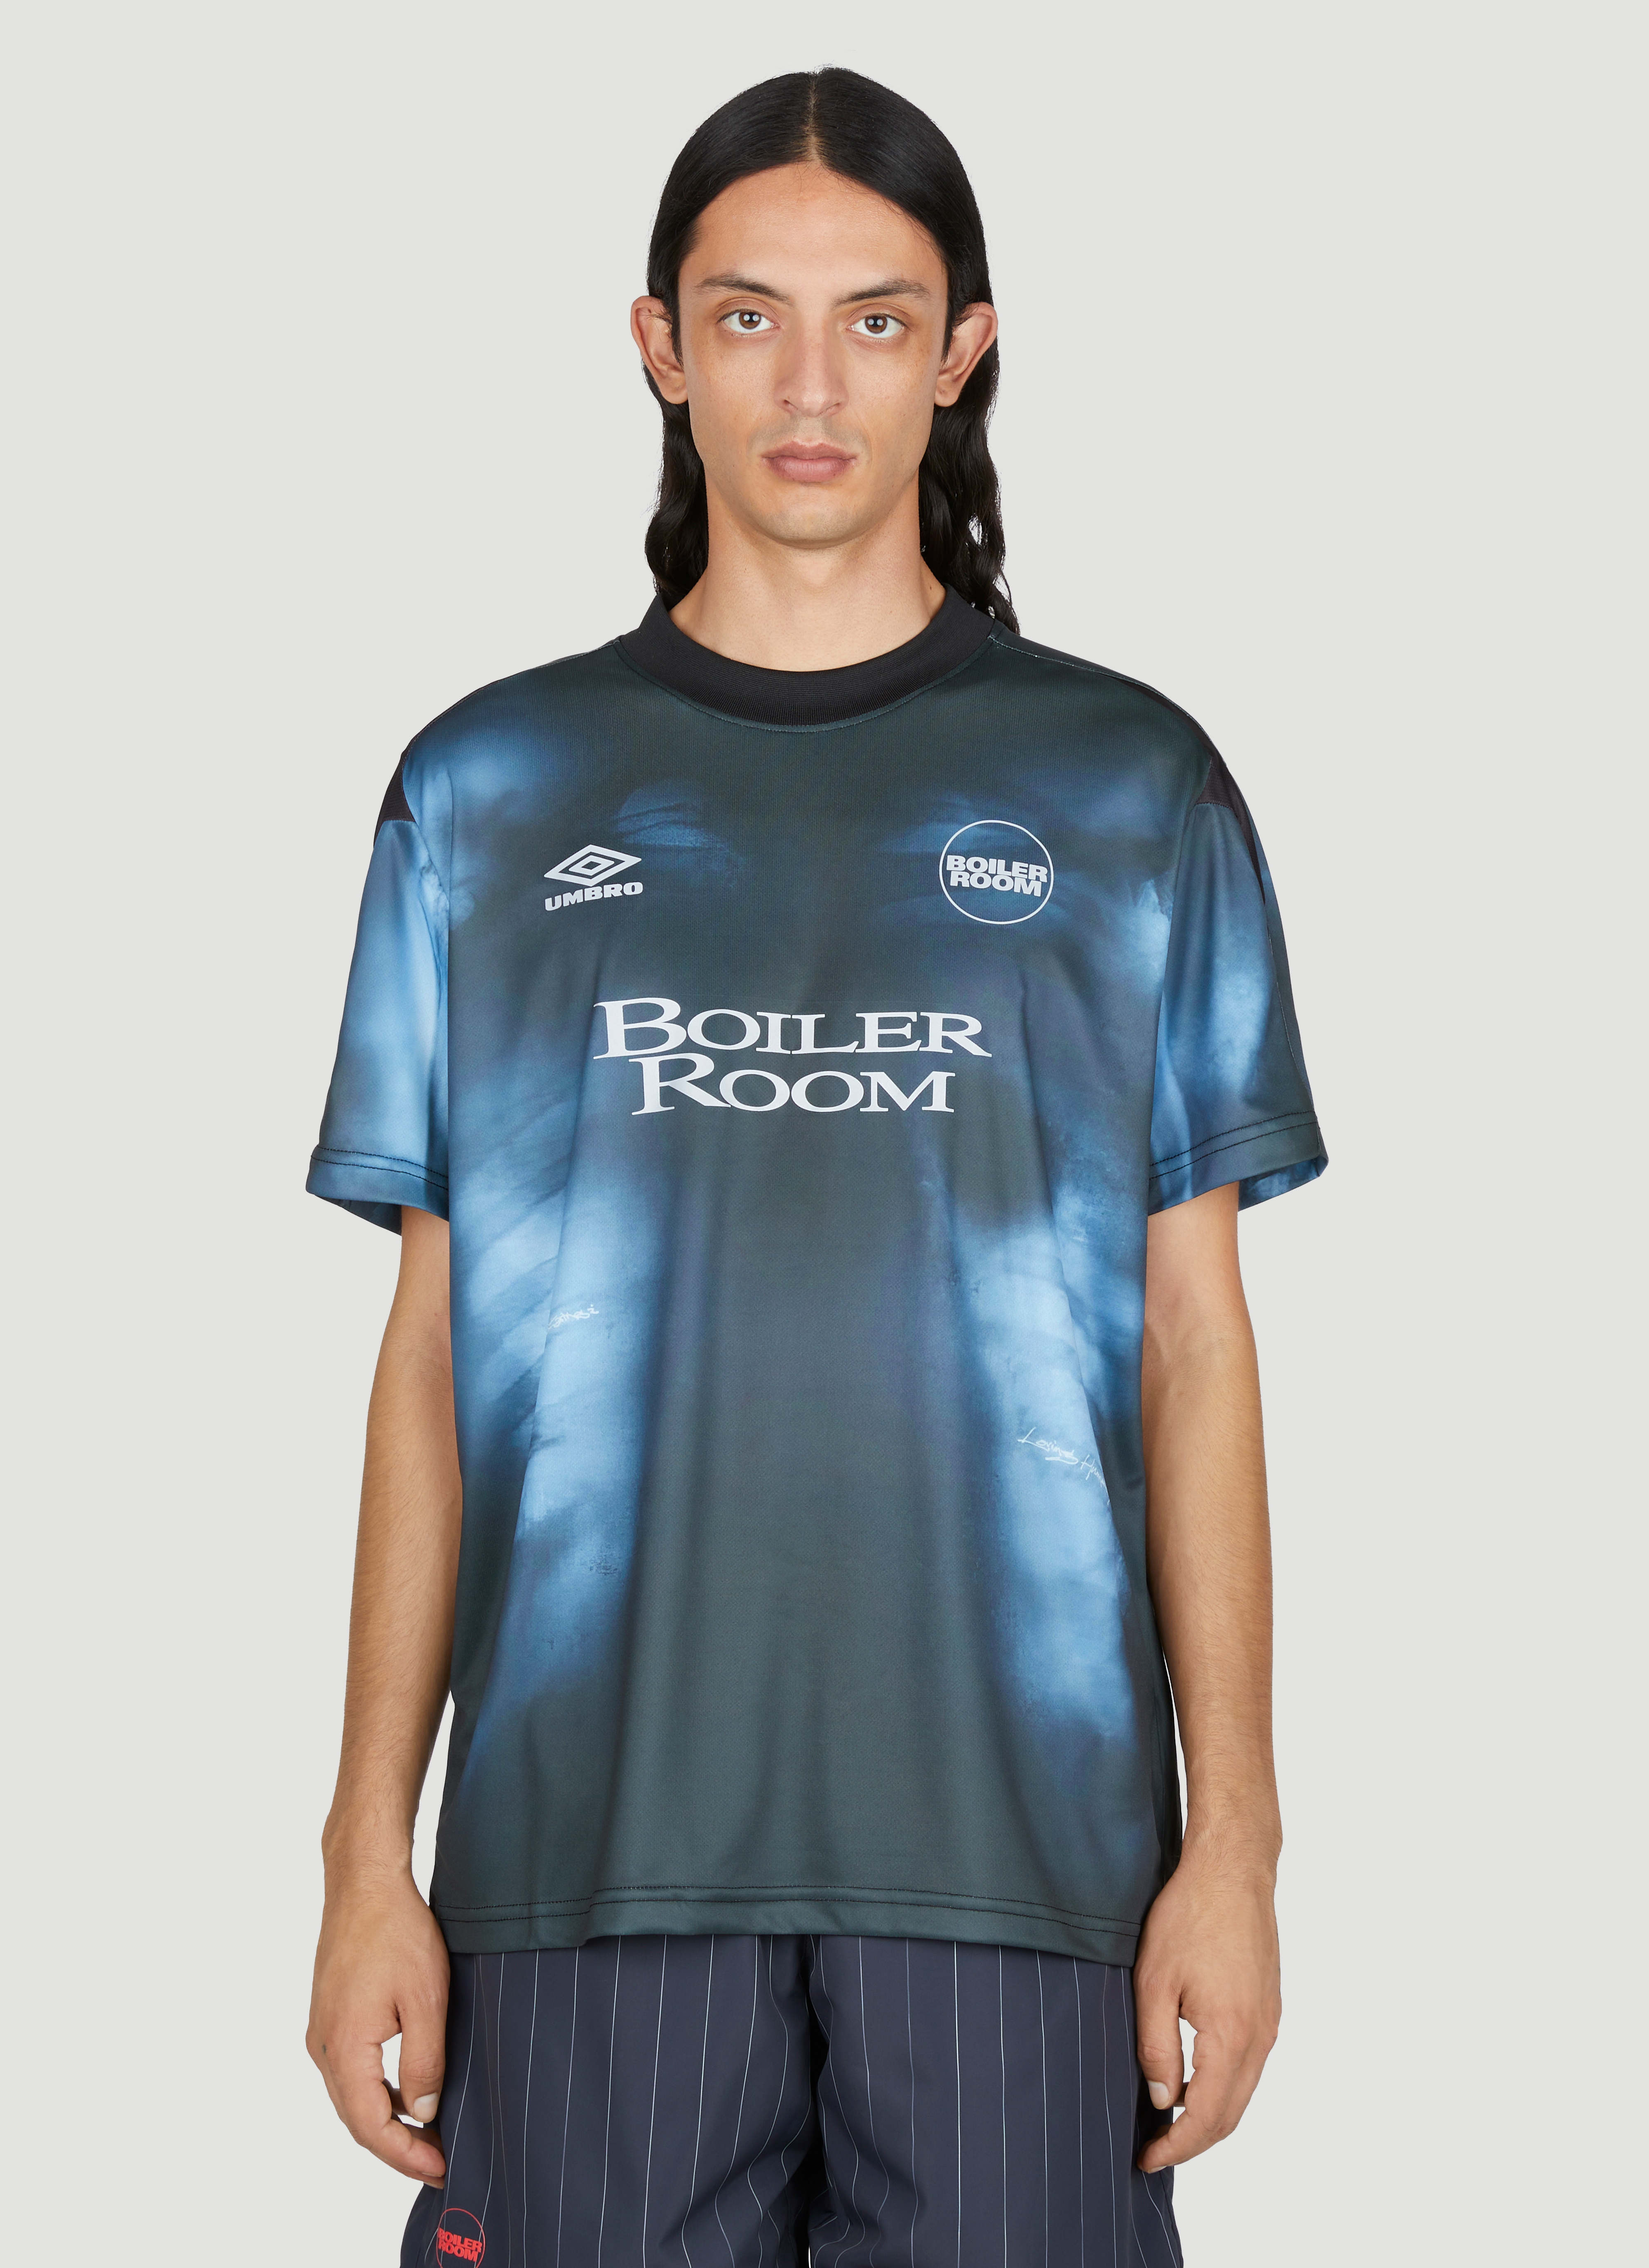 Boiler Room x Umbro Graphic Print Football T-Shirt in Black | LN-CC®